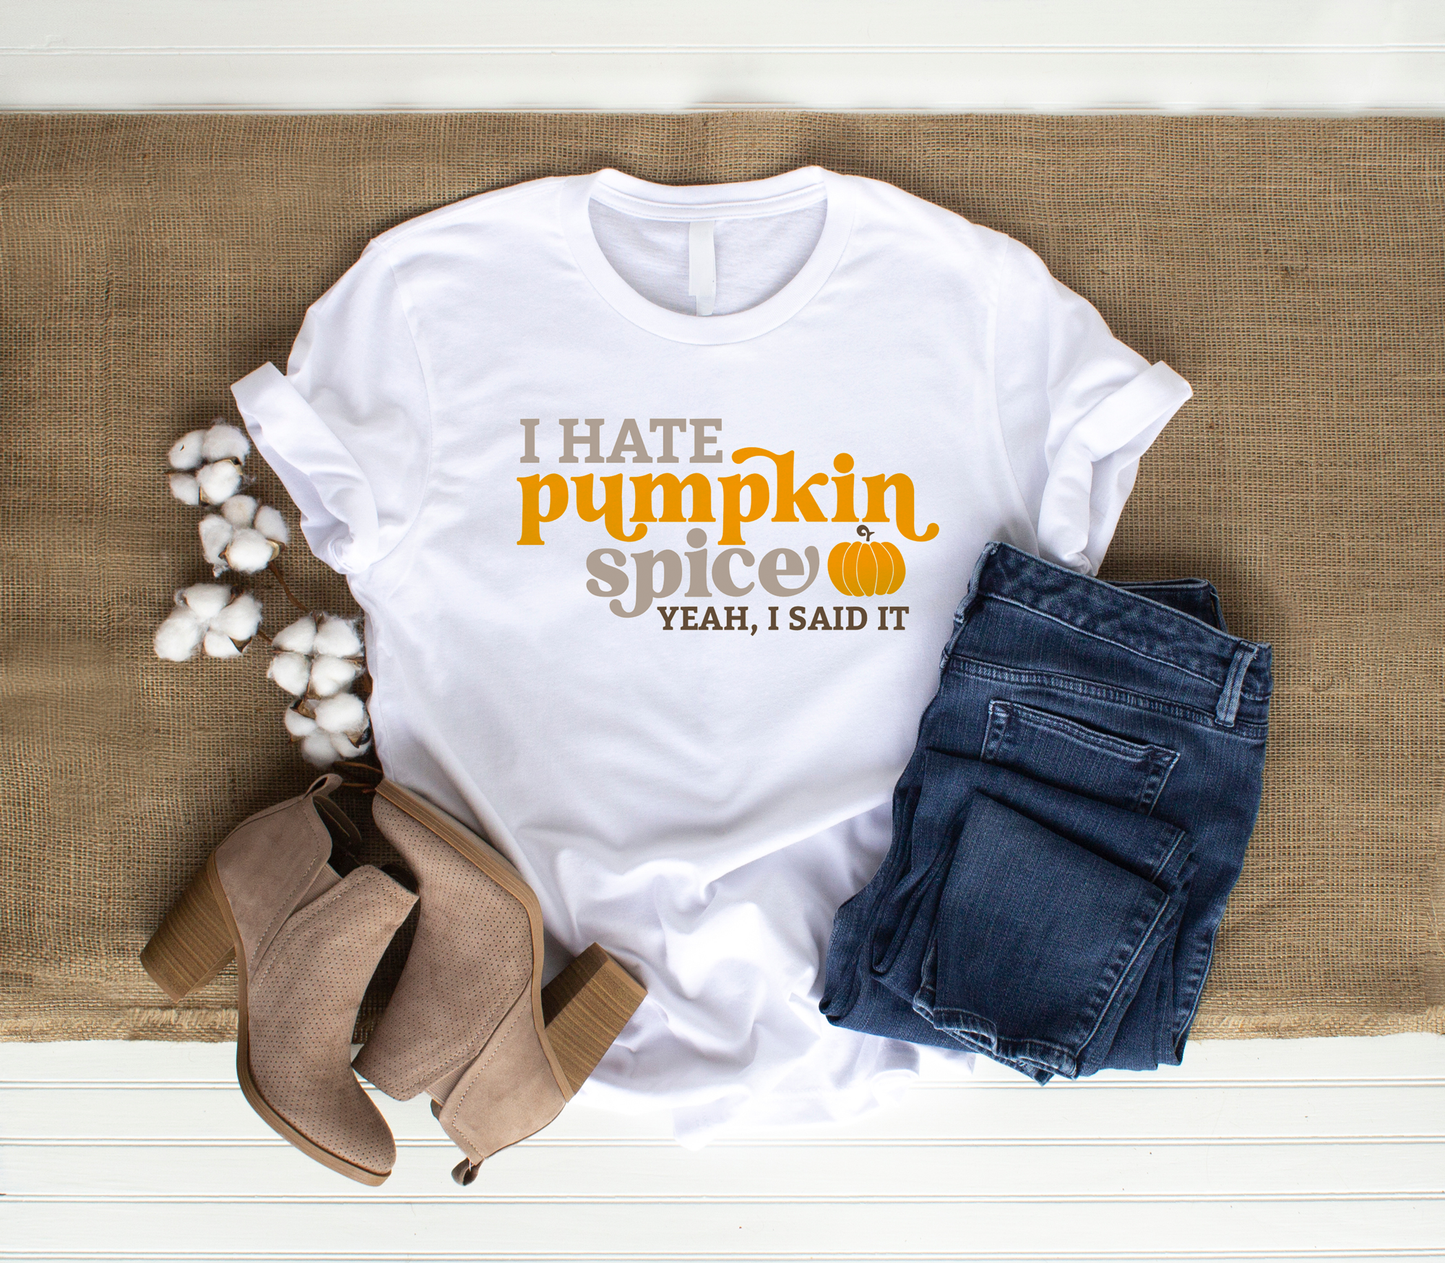 I Hate Pumpkin Spice Yeah I Said It T-Shirt